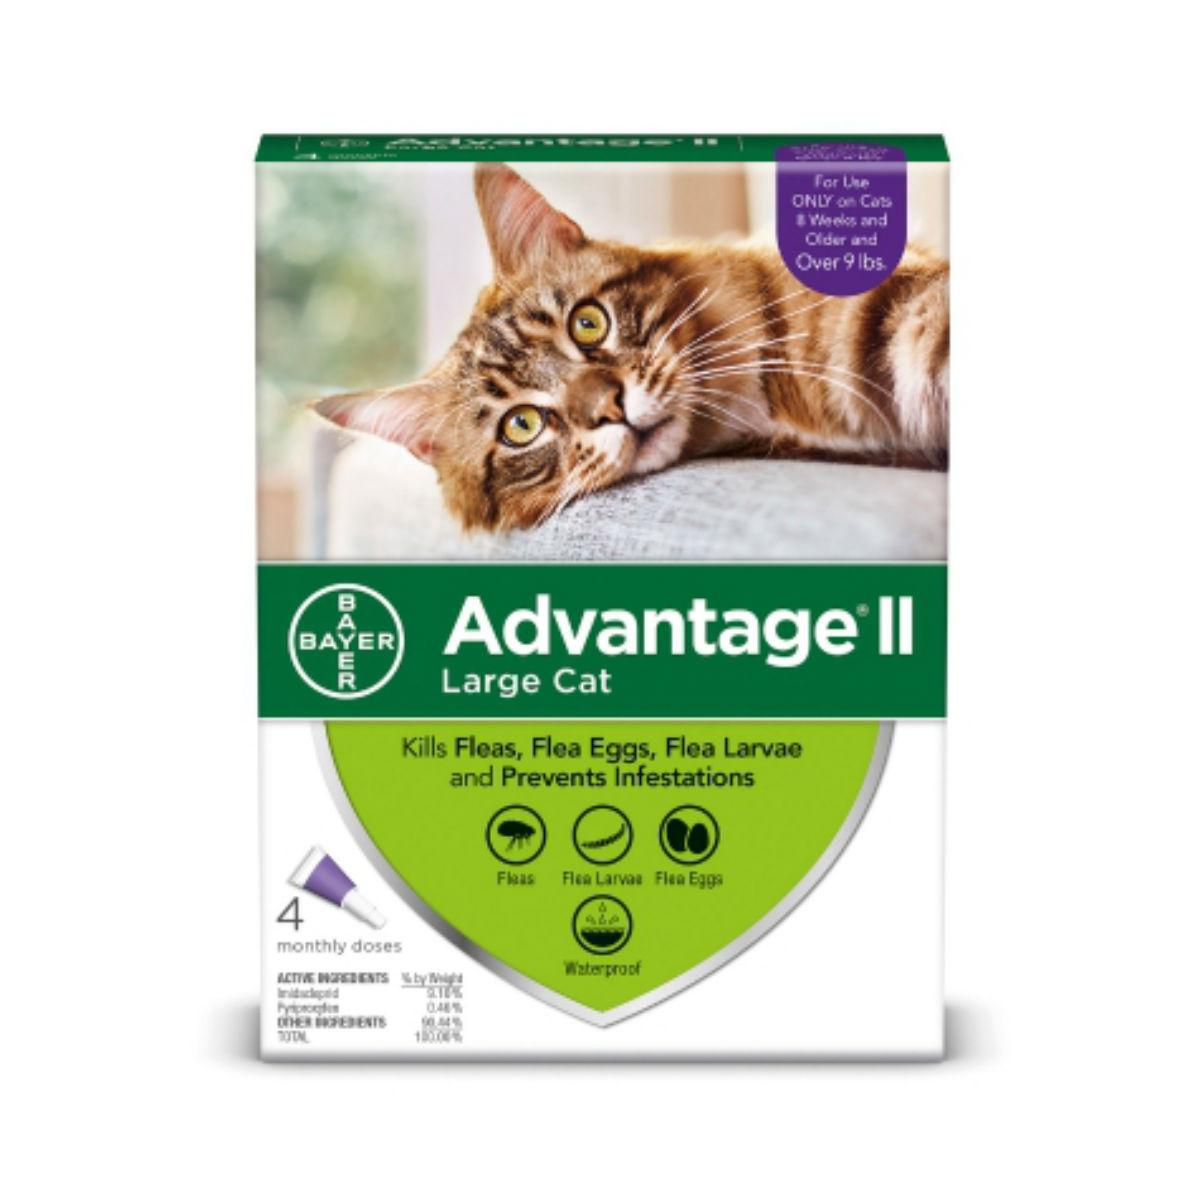 Advantage II Flea Control Cat Treatment - 4 Month Supply